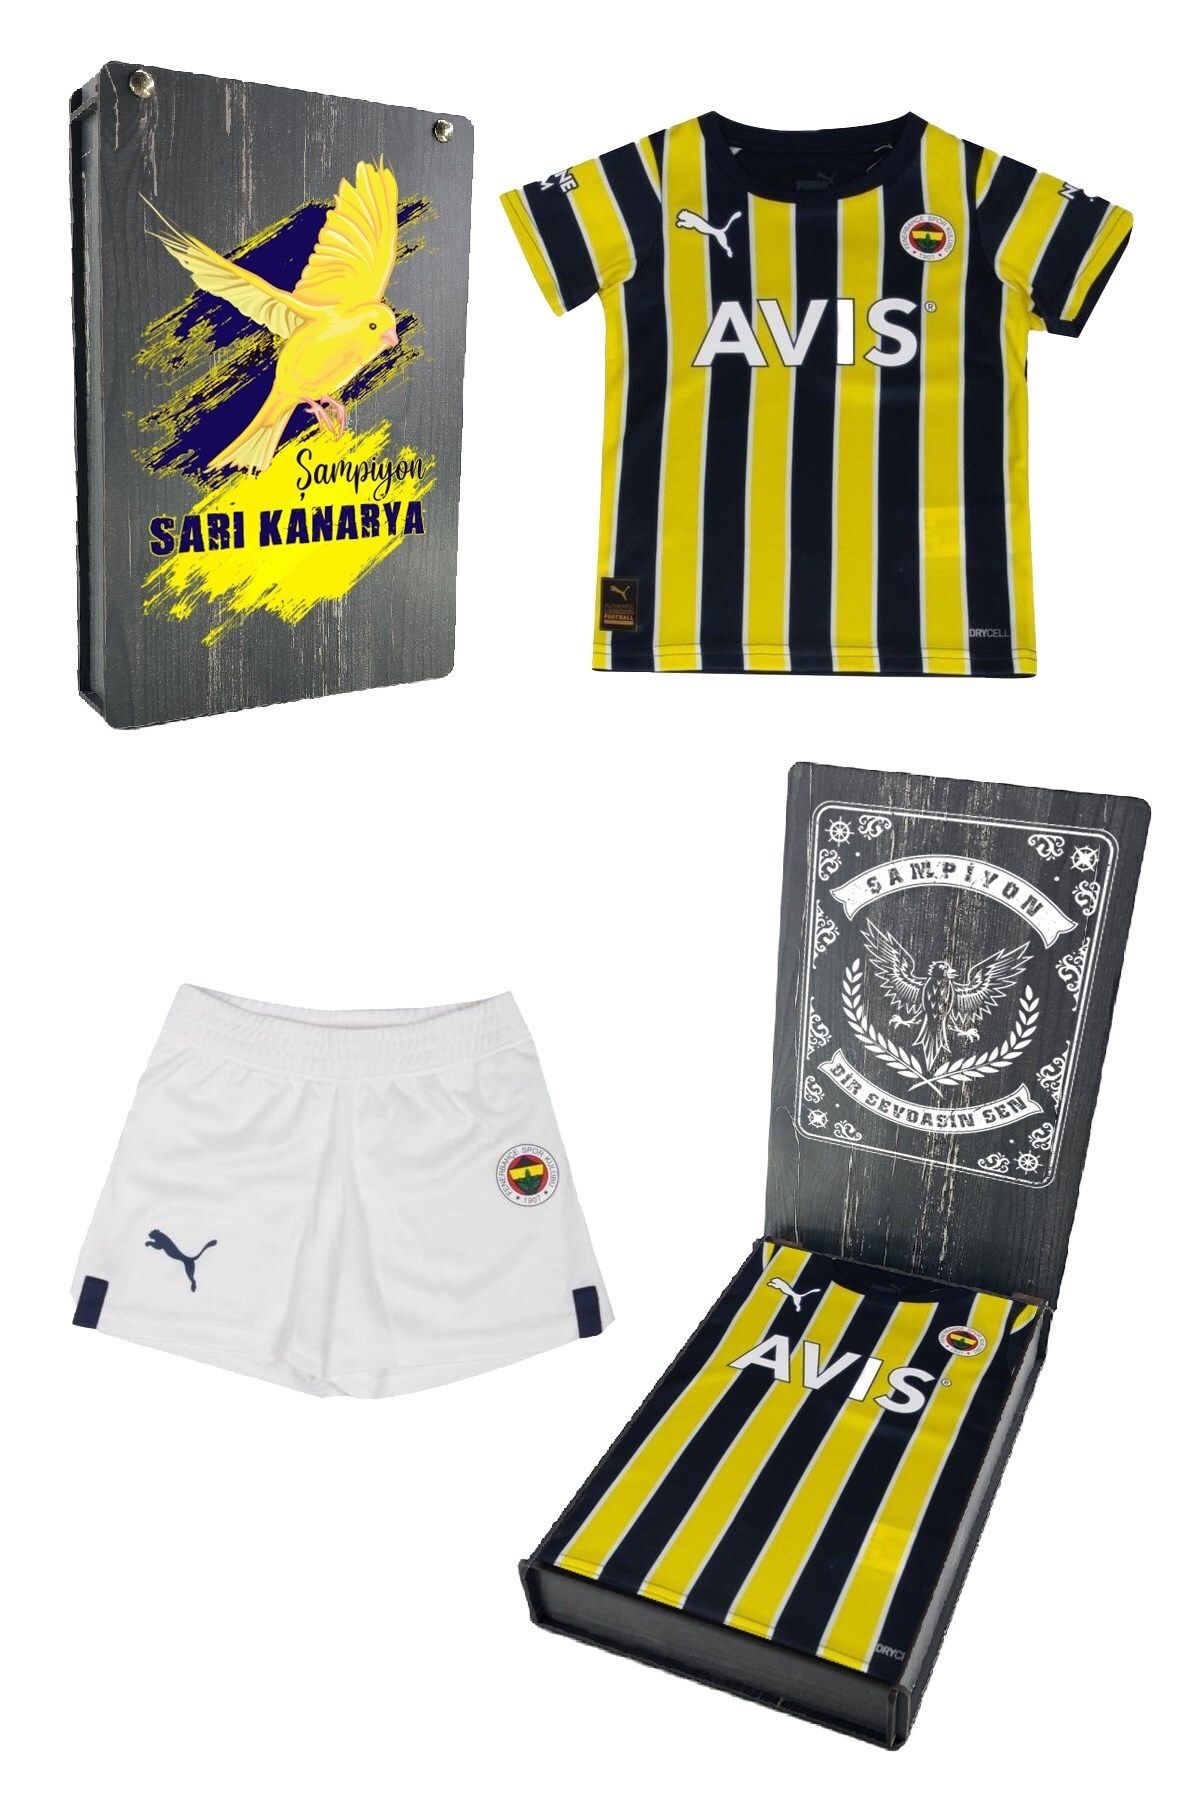 Fenerbahçe Orijinal Çubuklu Çocuk Forma Set Hediyelik Ahşap Kutulu